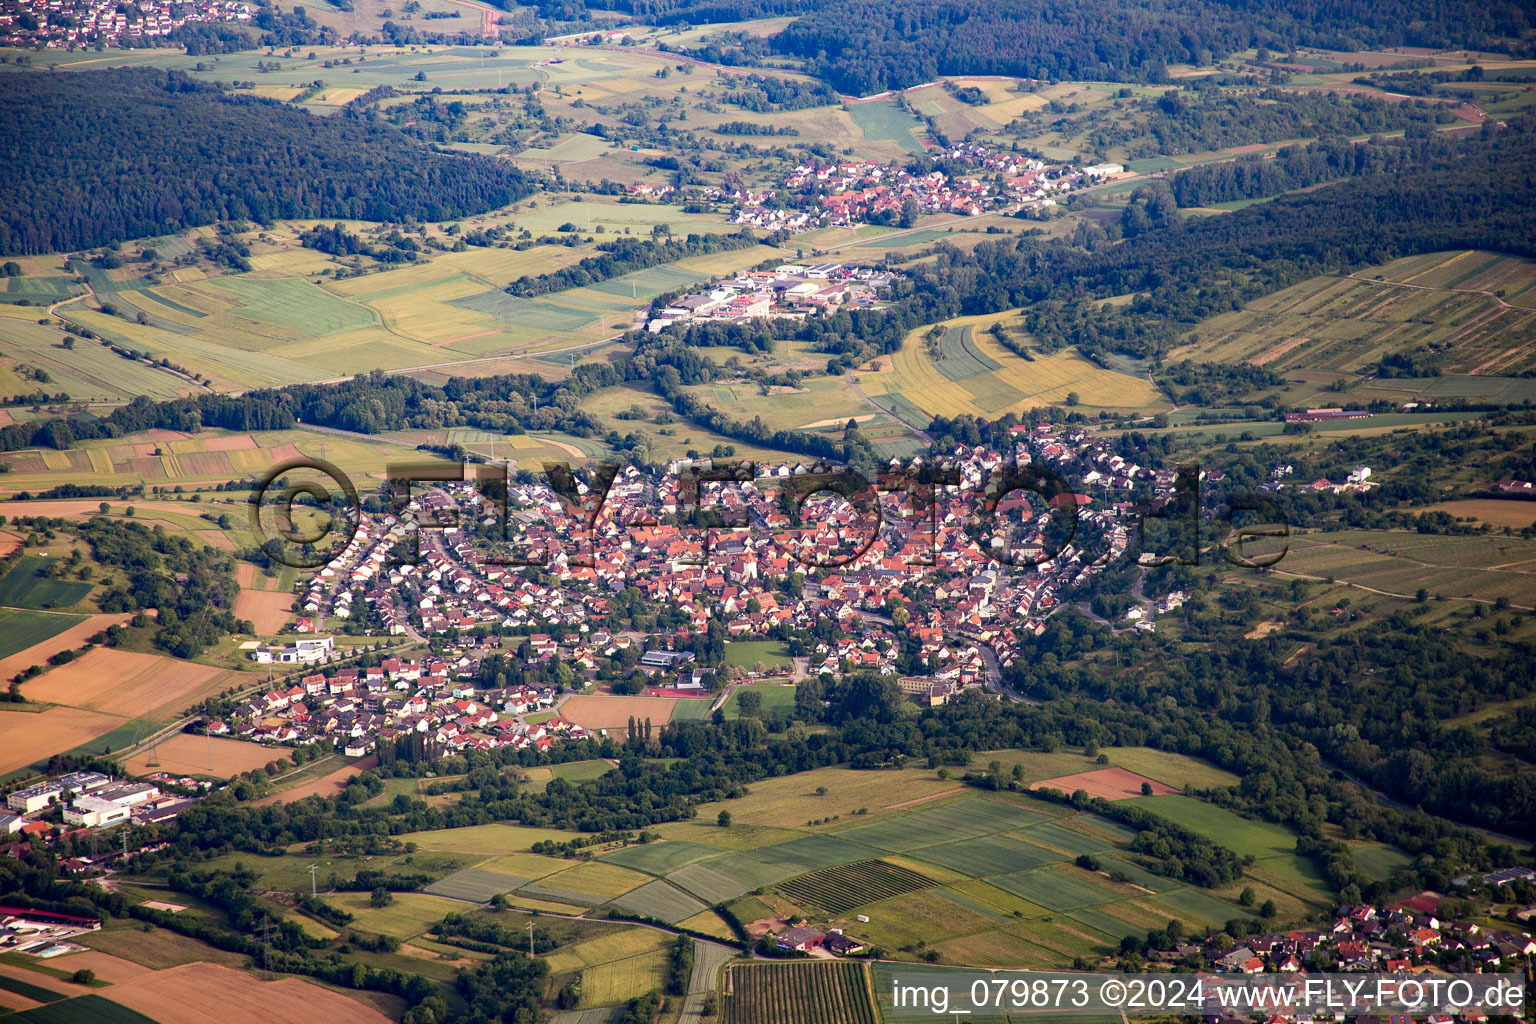 Aerial view of Ellmendingen in the state Baden-Wuerttemberg, Germany